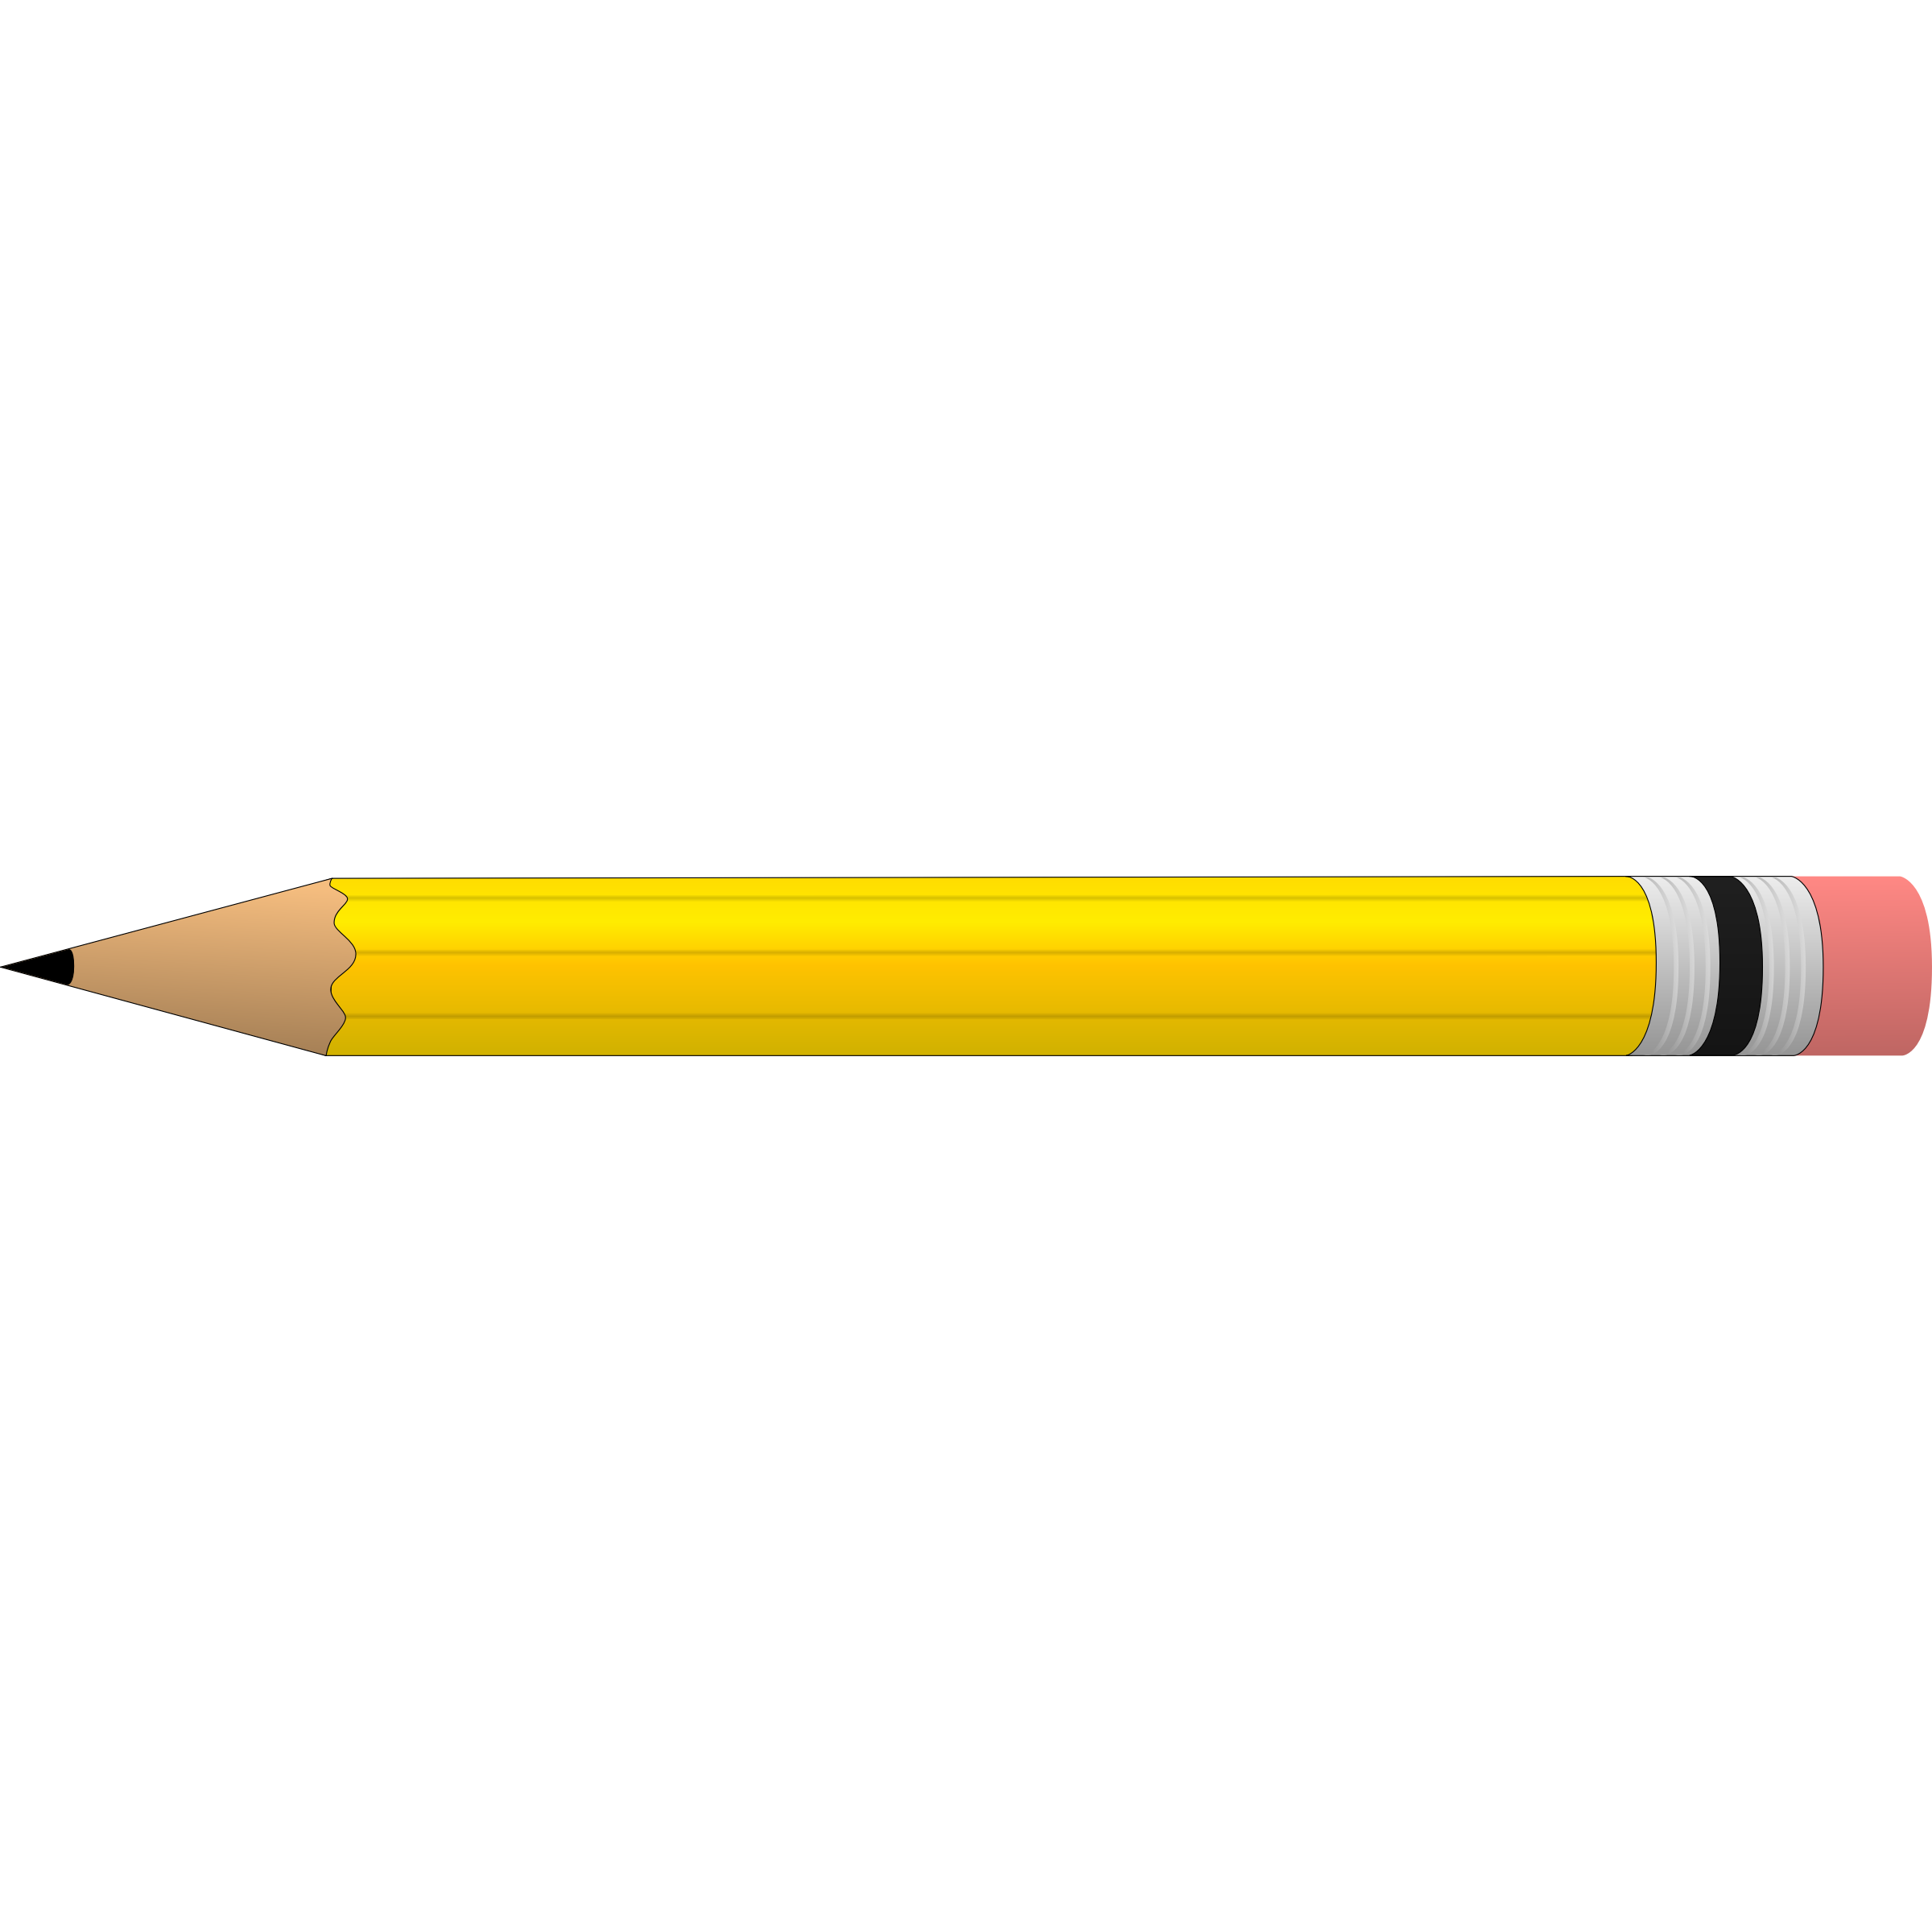 Top Pencil For Clip Art Free Clipart Image - Pencil, Transparent background PNG HD thumbnail